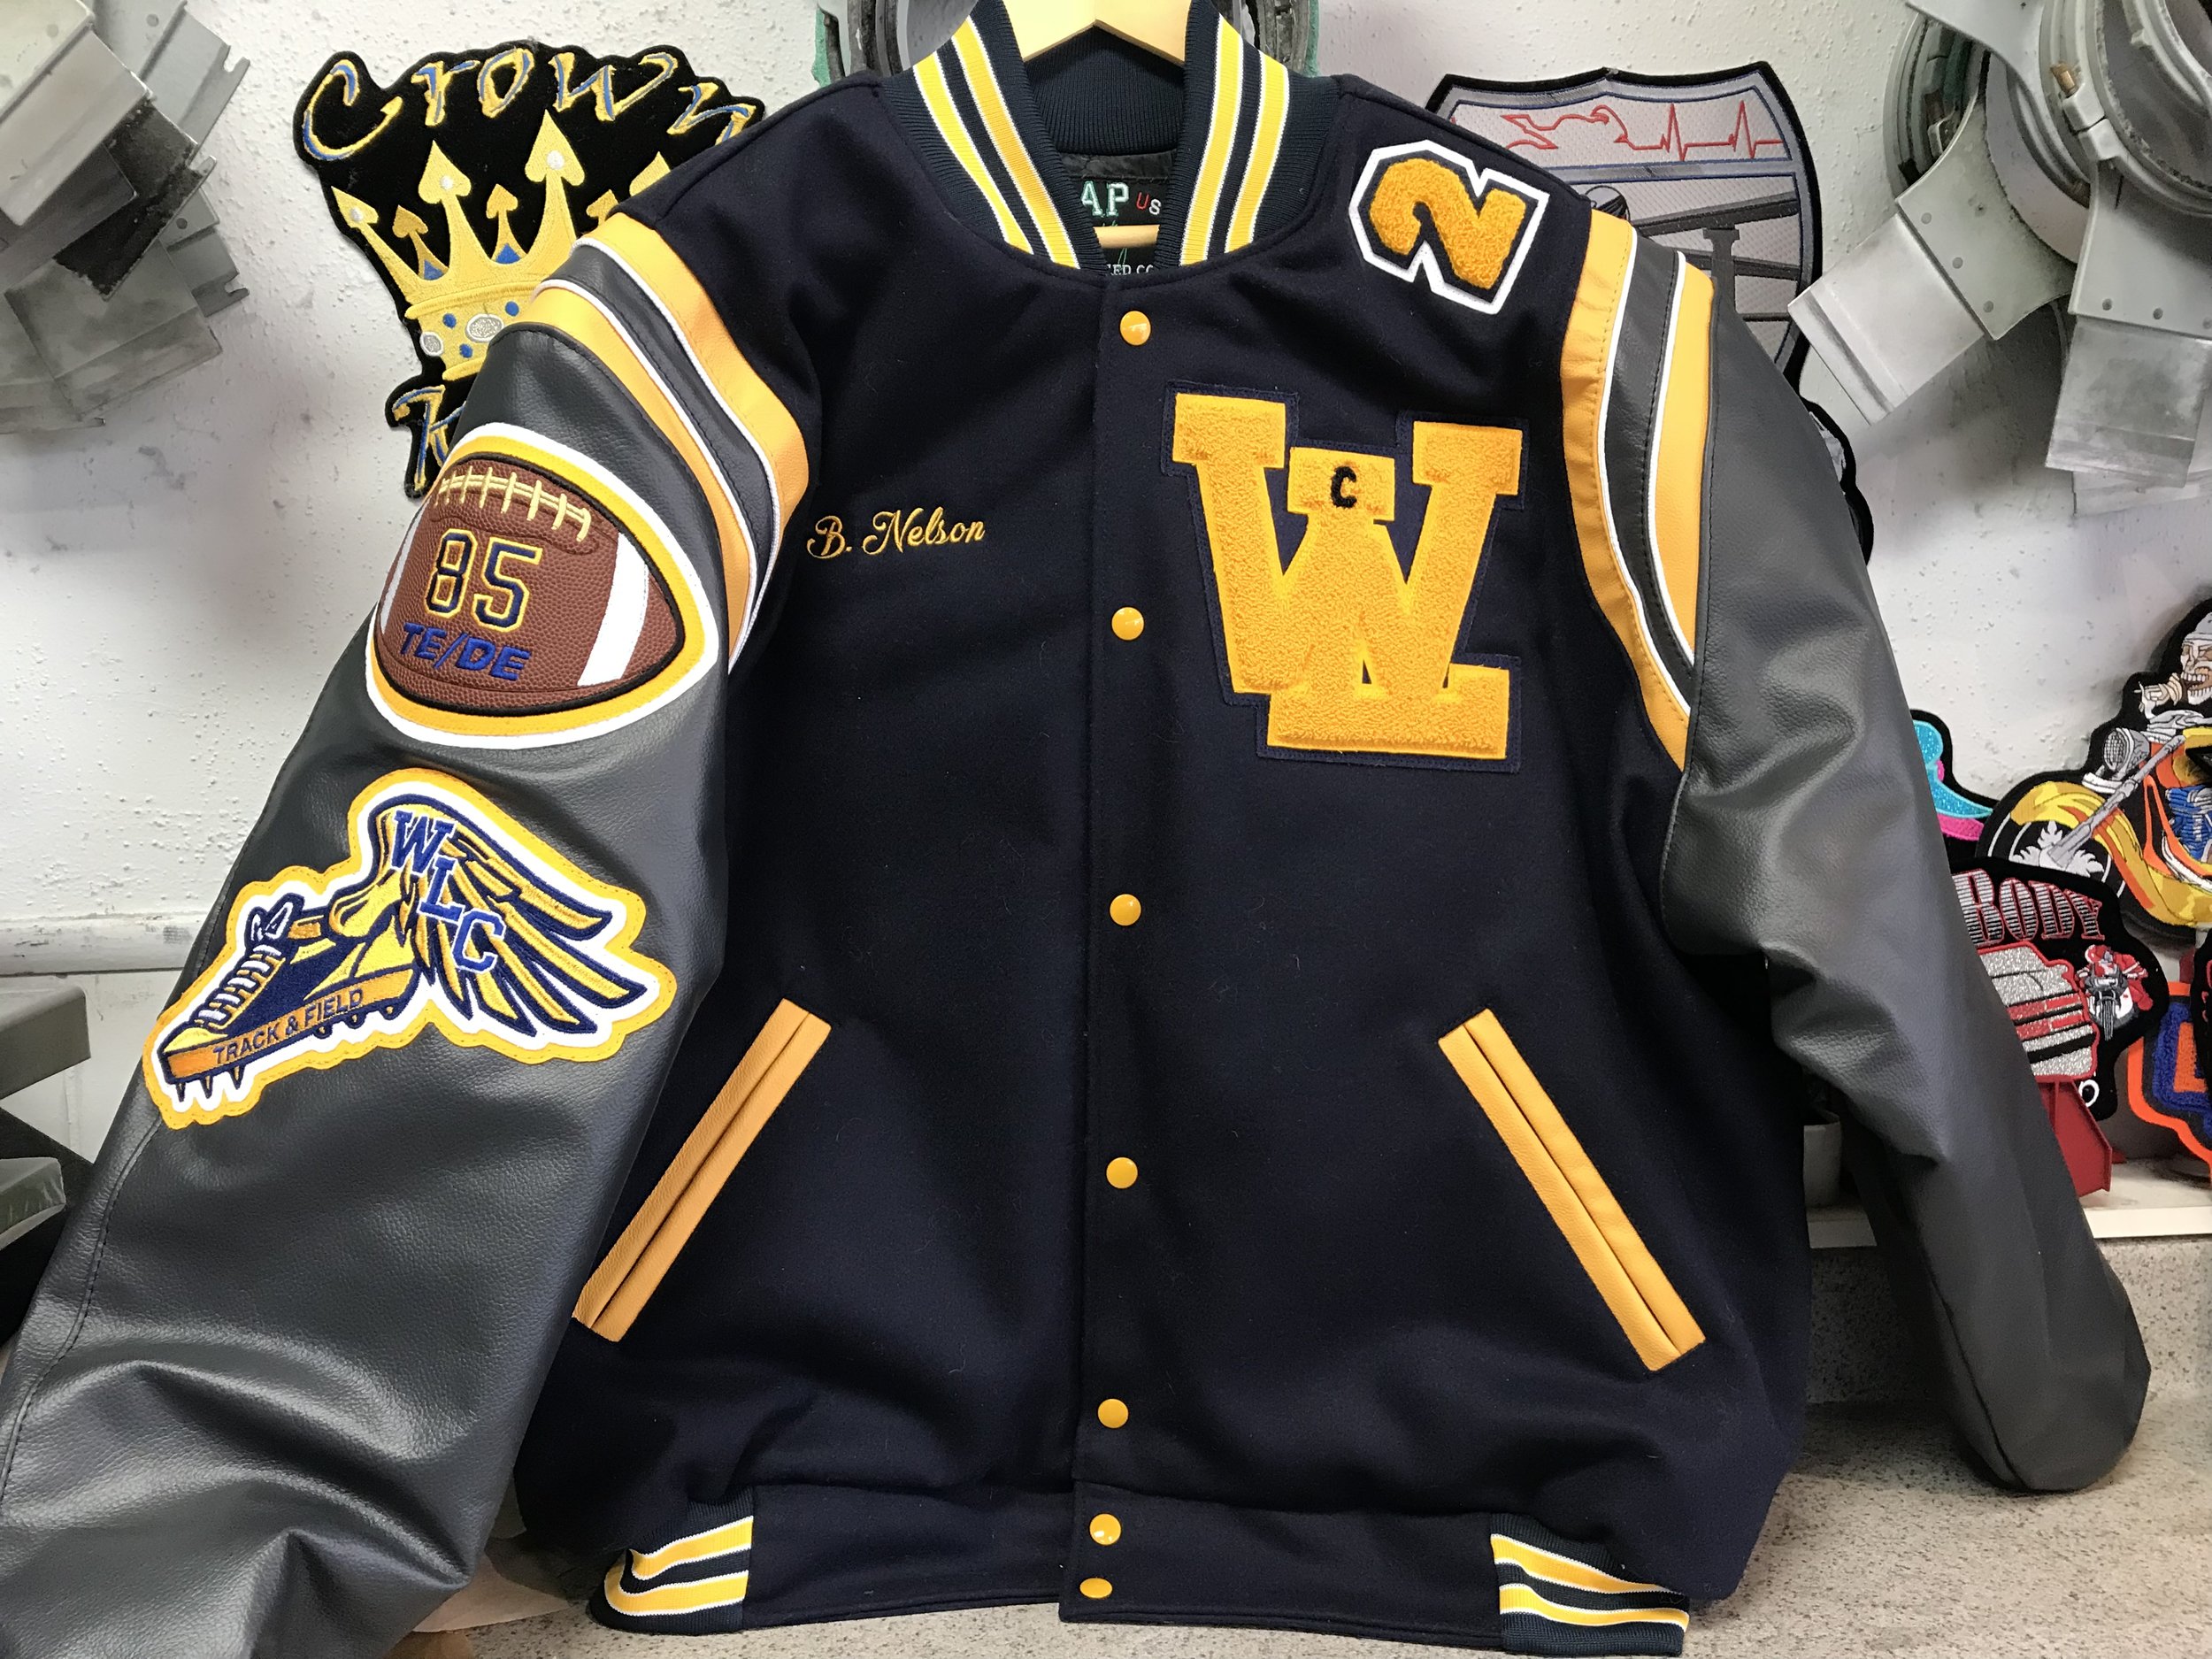 Central Varsity Jacket